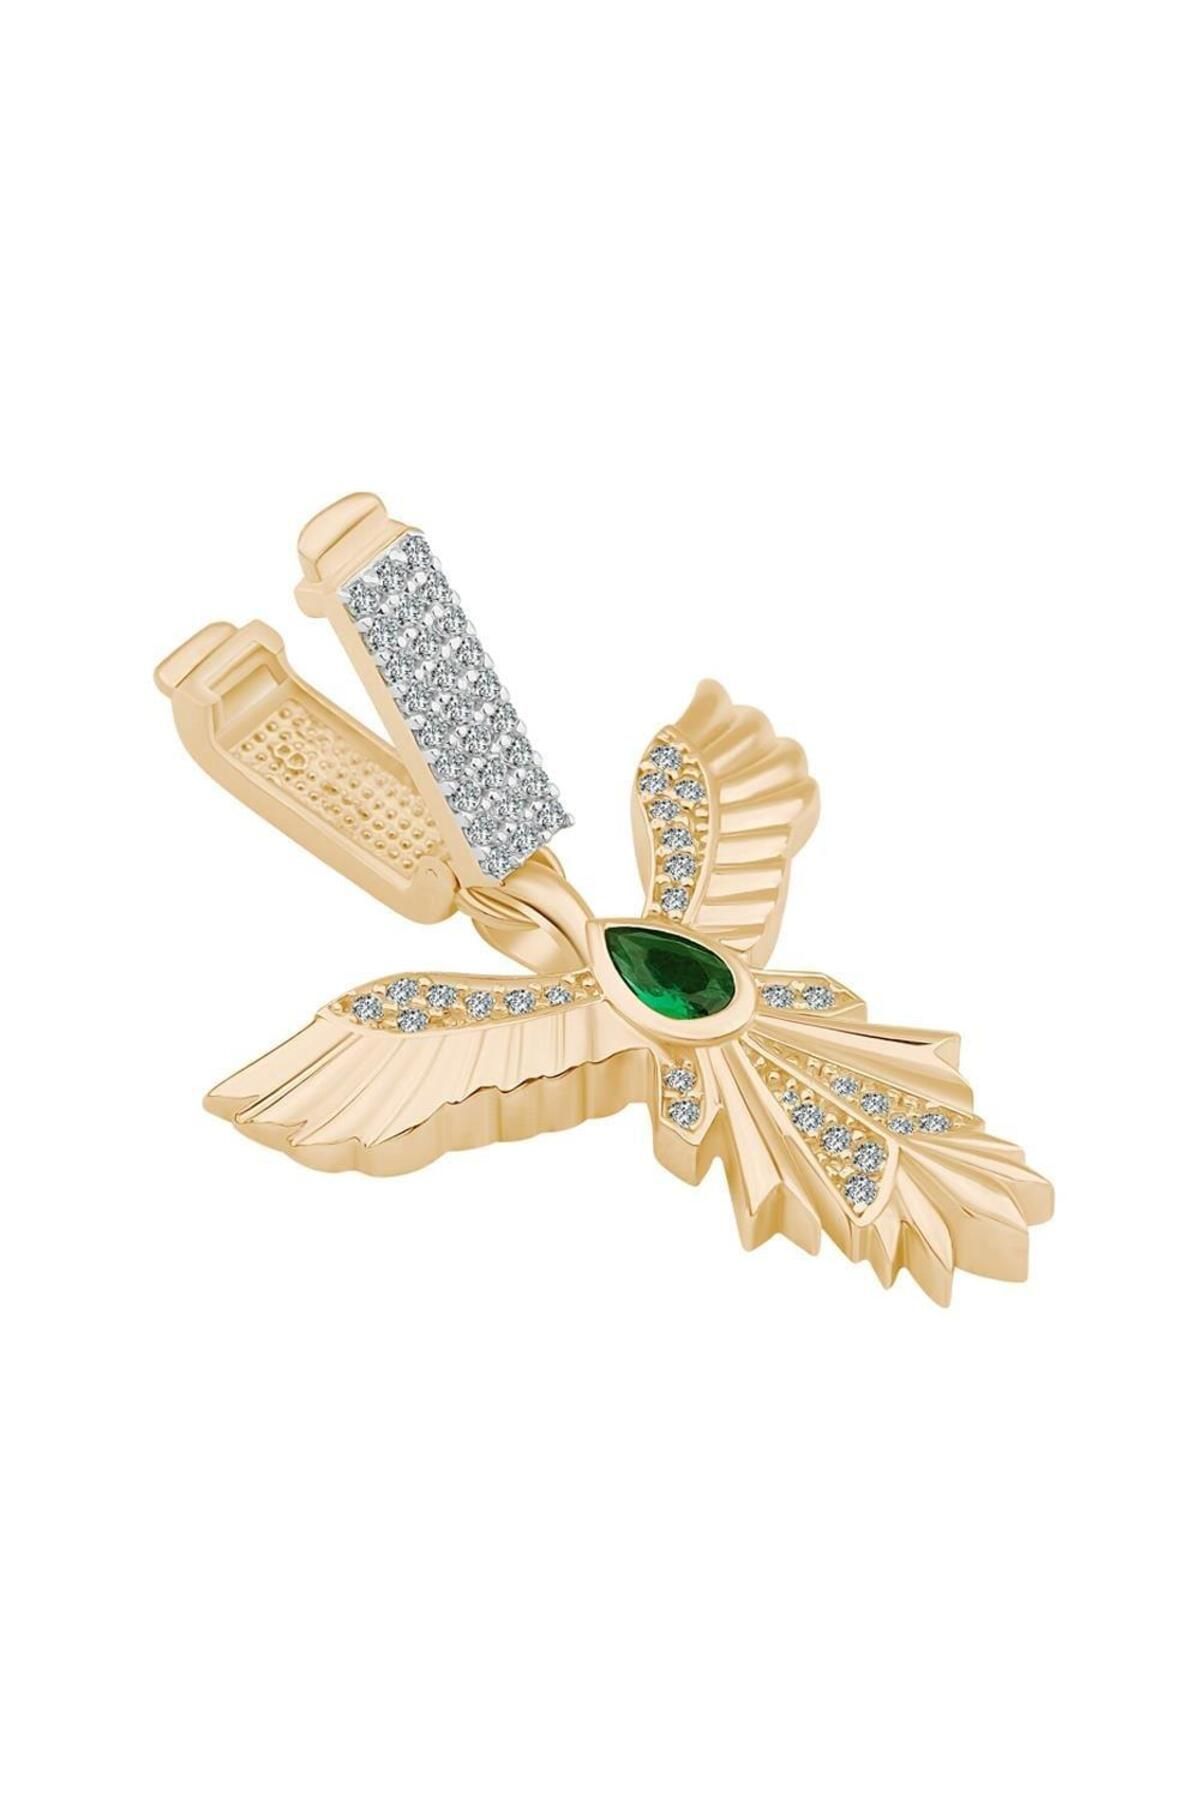 Ema Jewellery Altın Anka Kuşu Sallantılı 9mm Bileklik Charm